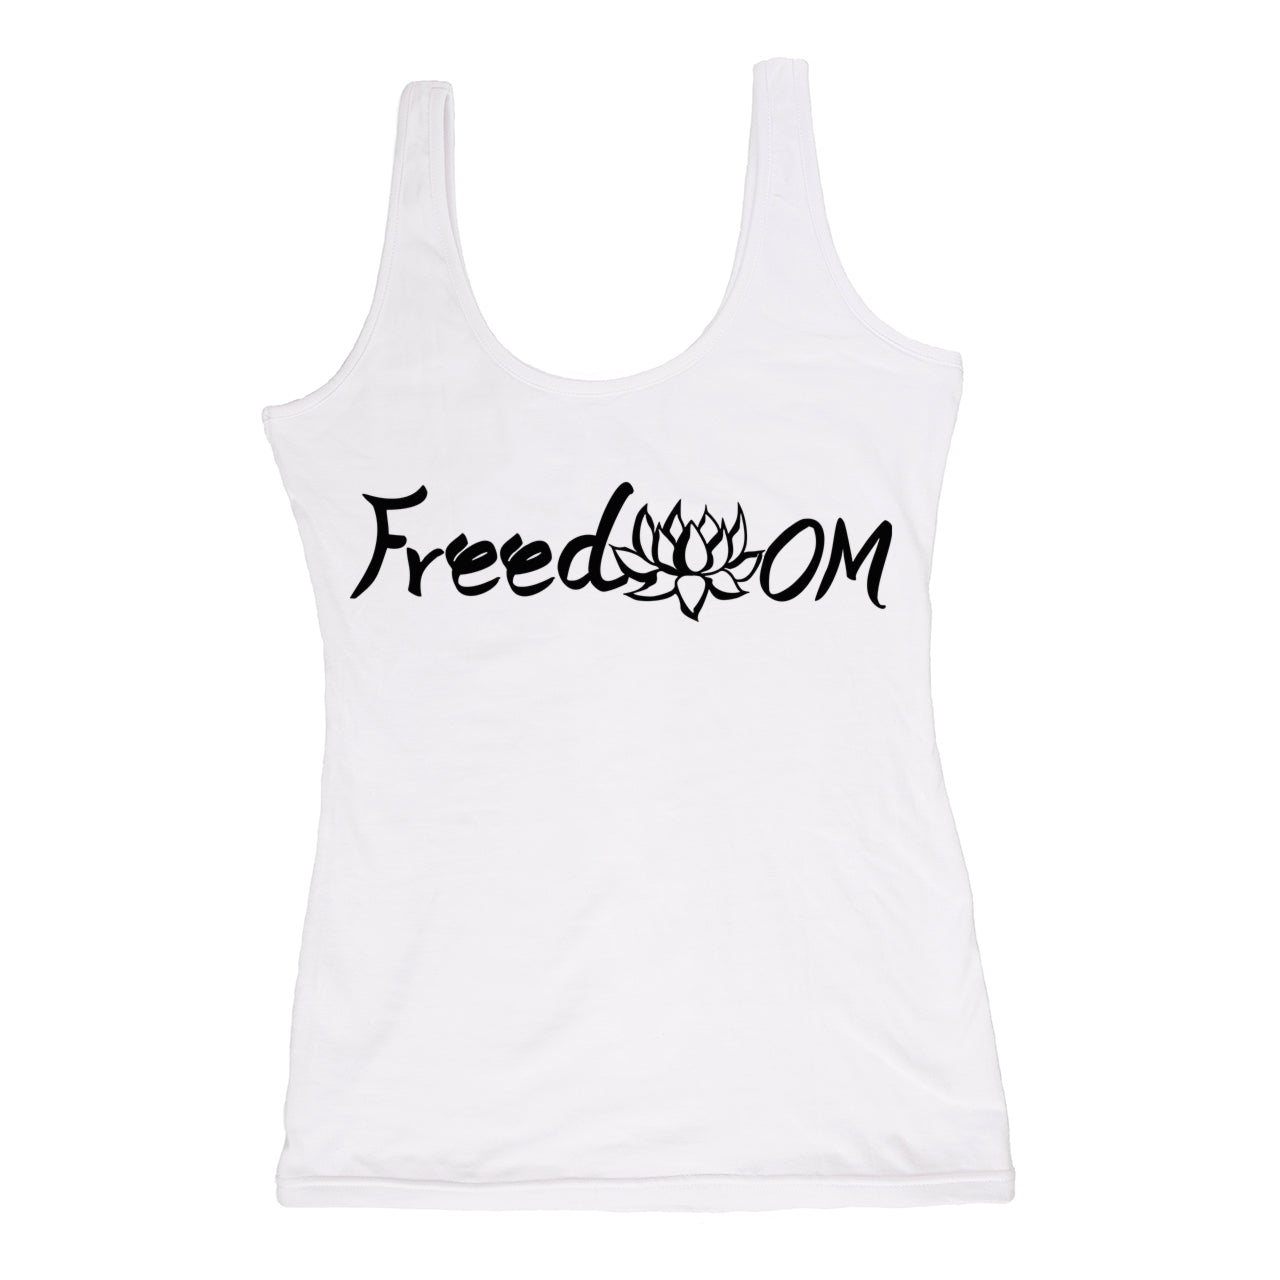 White Freedom Tank Top - Treelance Yoga